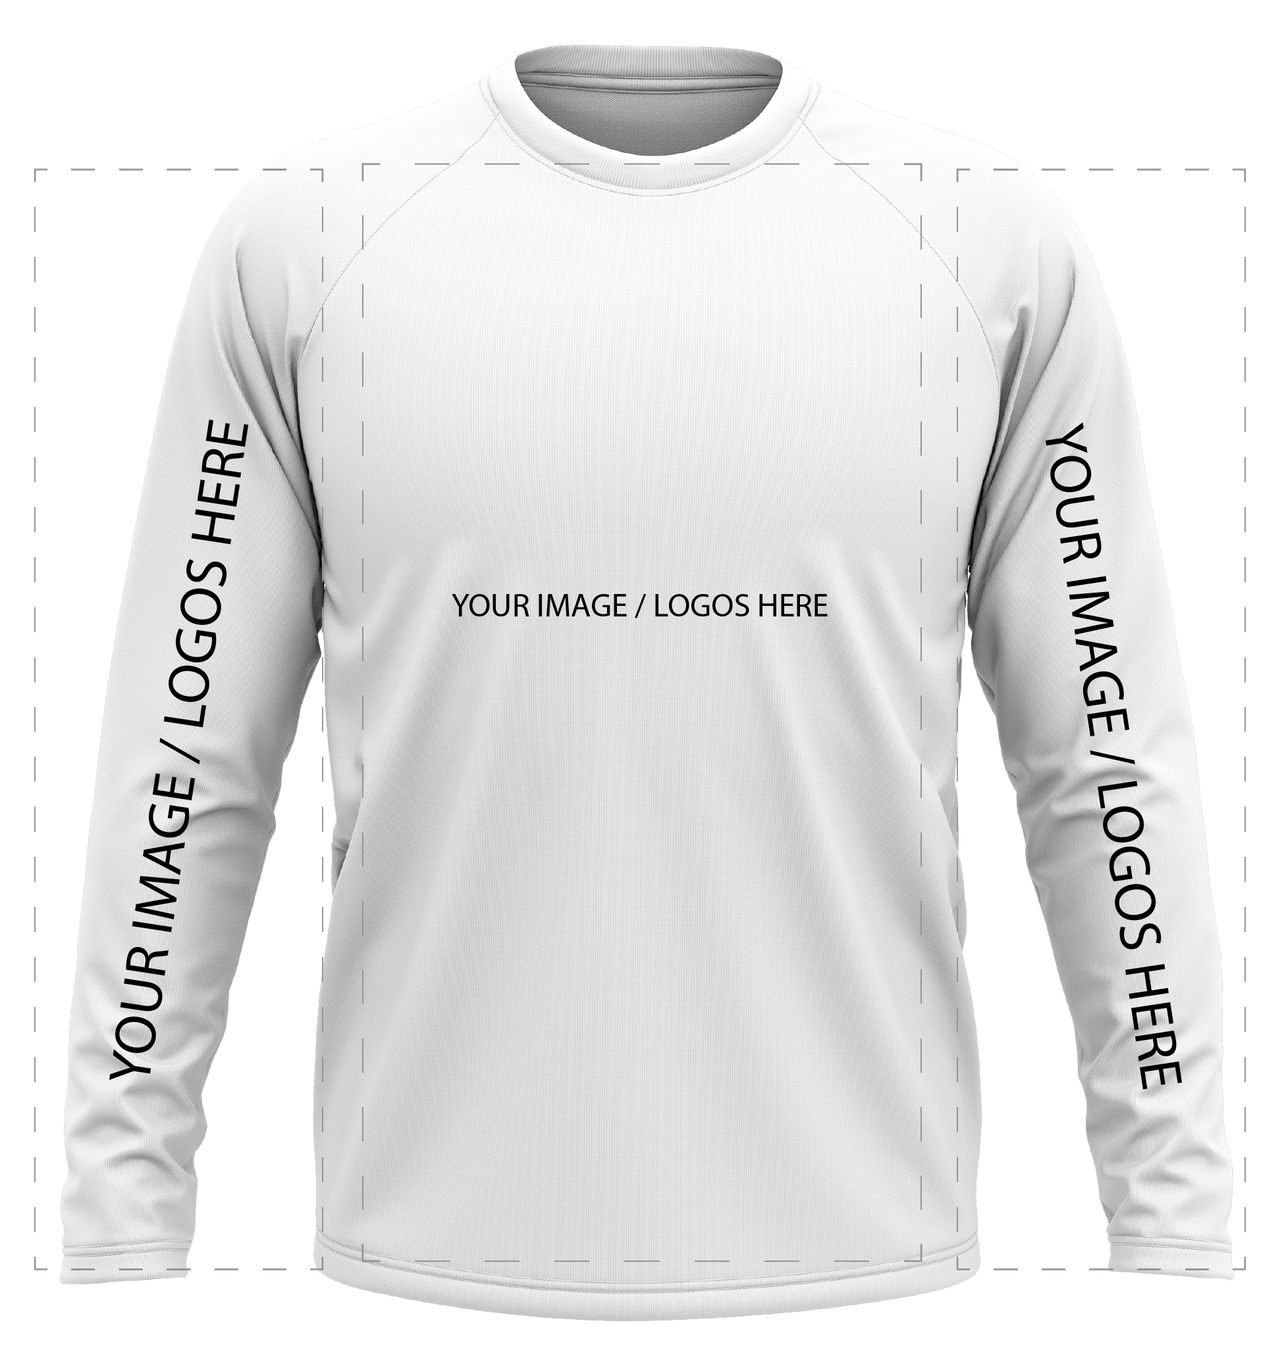 design your own long sleeve shirt for baseball teams custom apparel